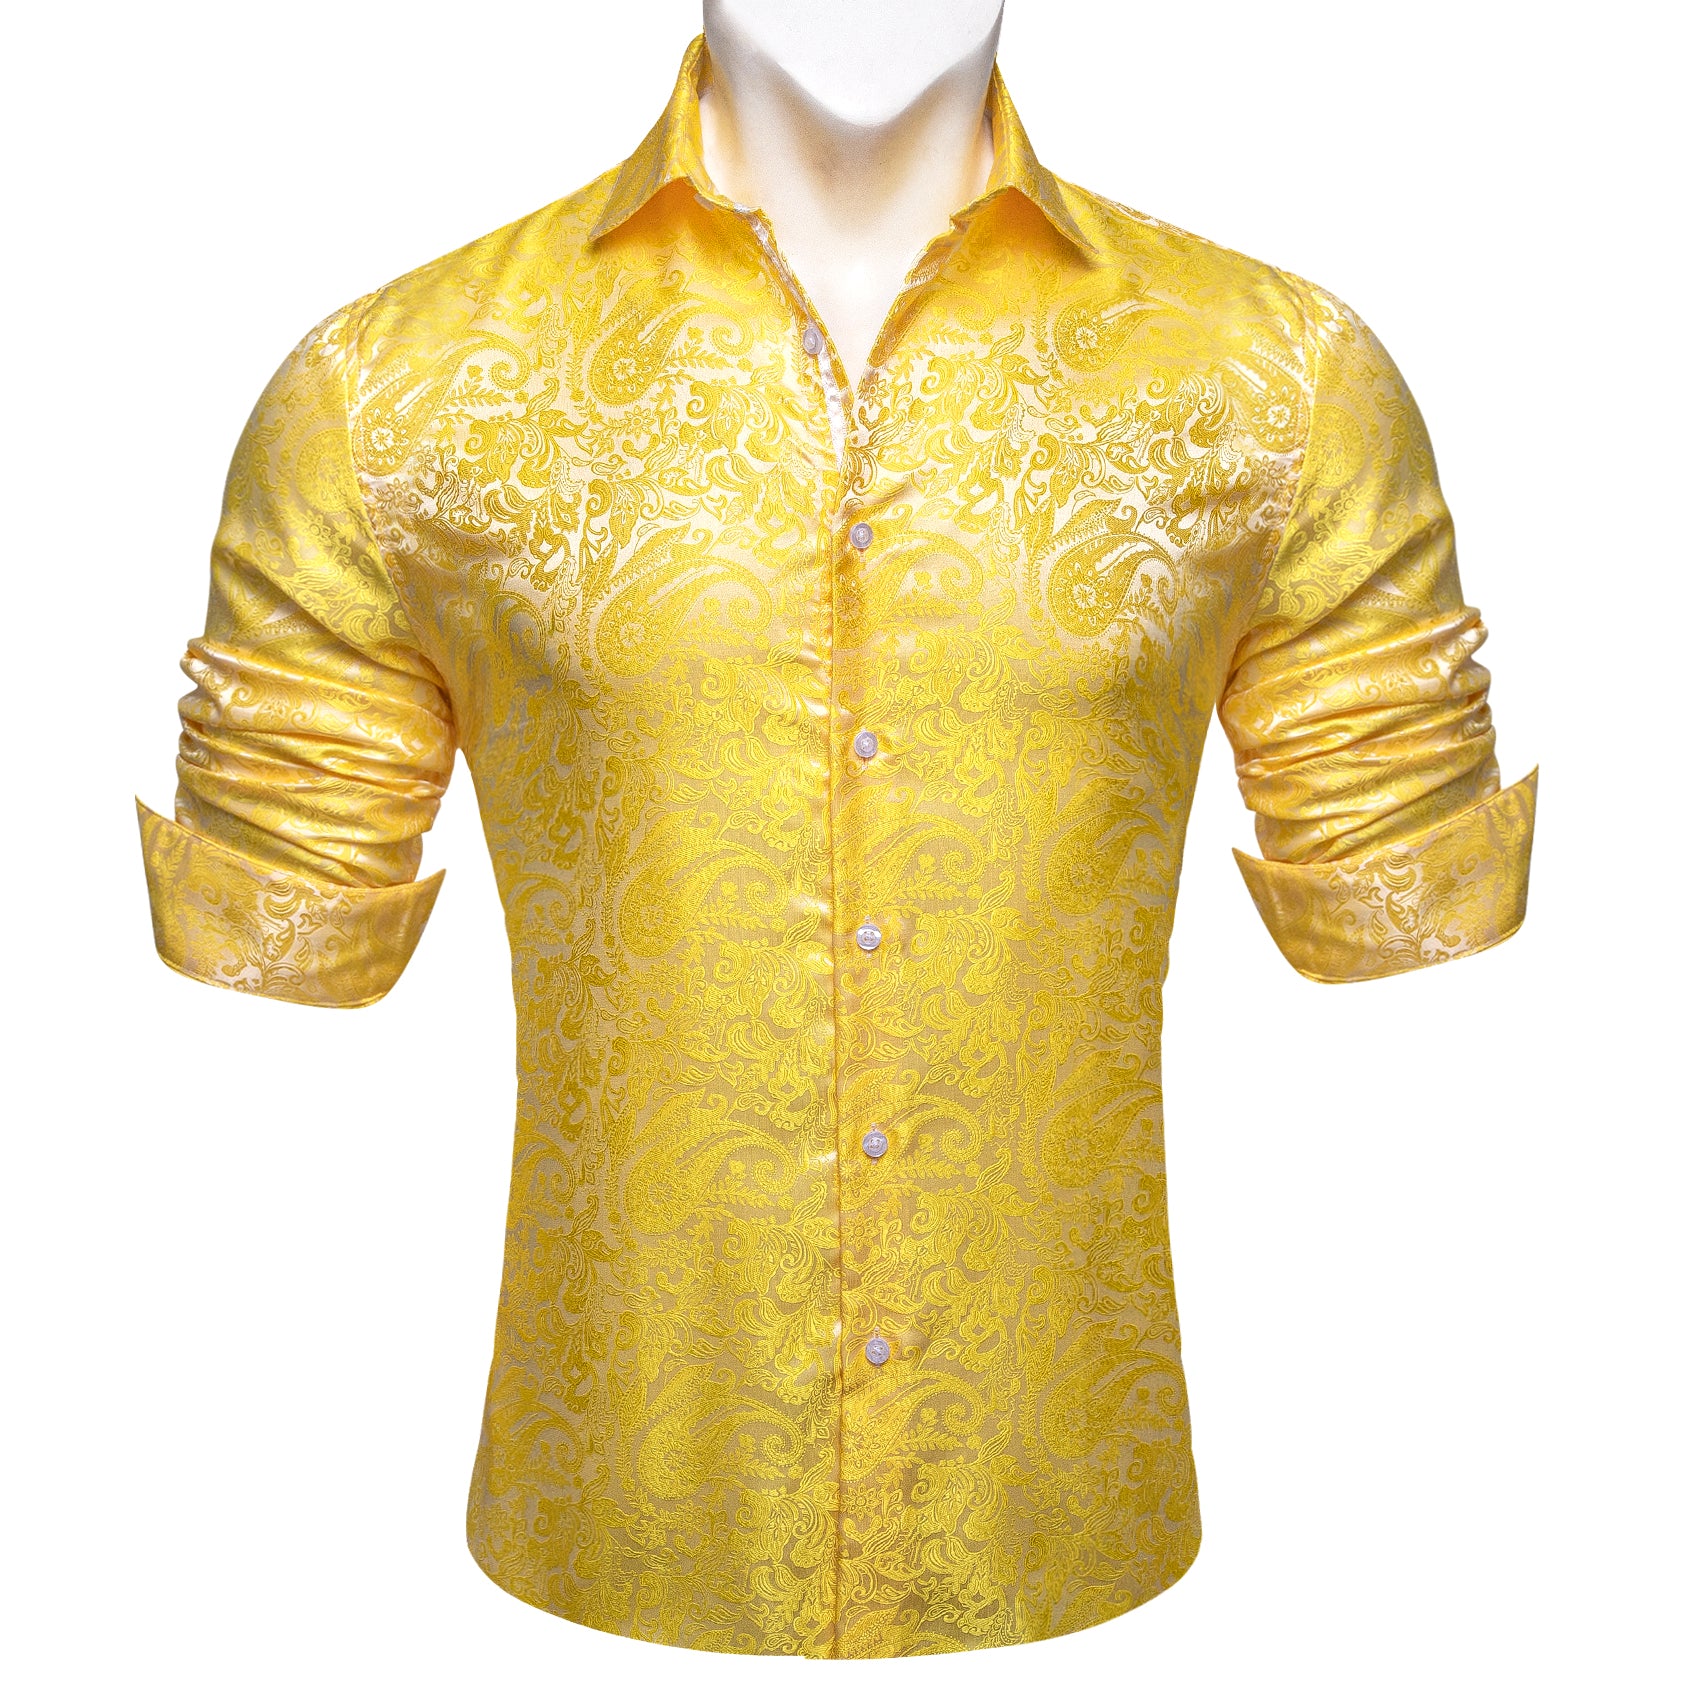 Men's Yellow Shirts - Macy's